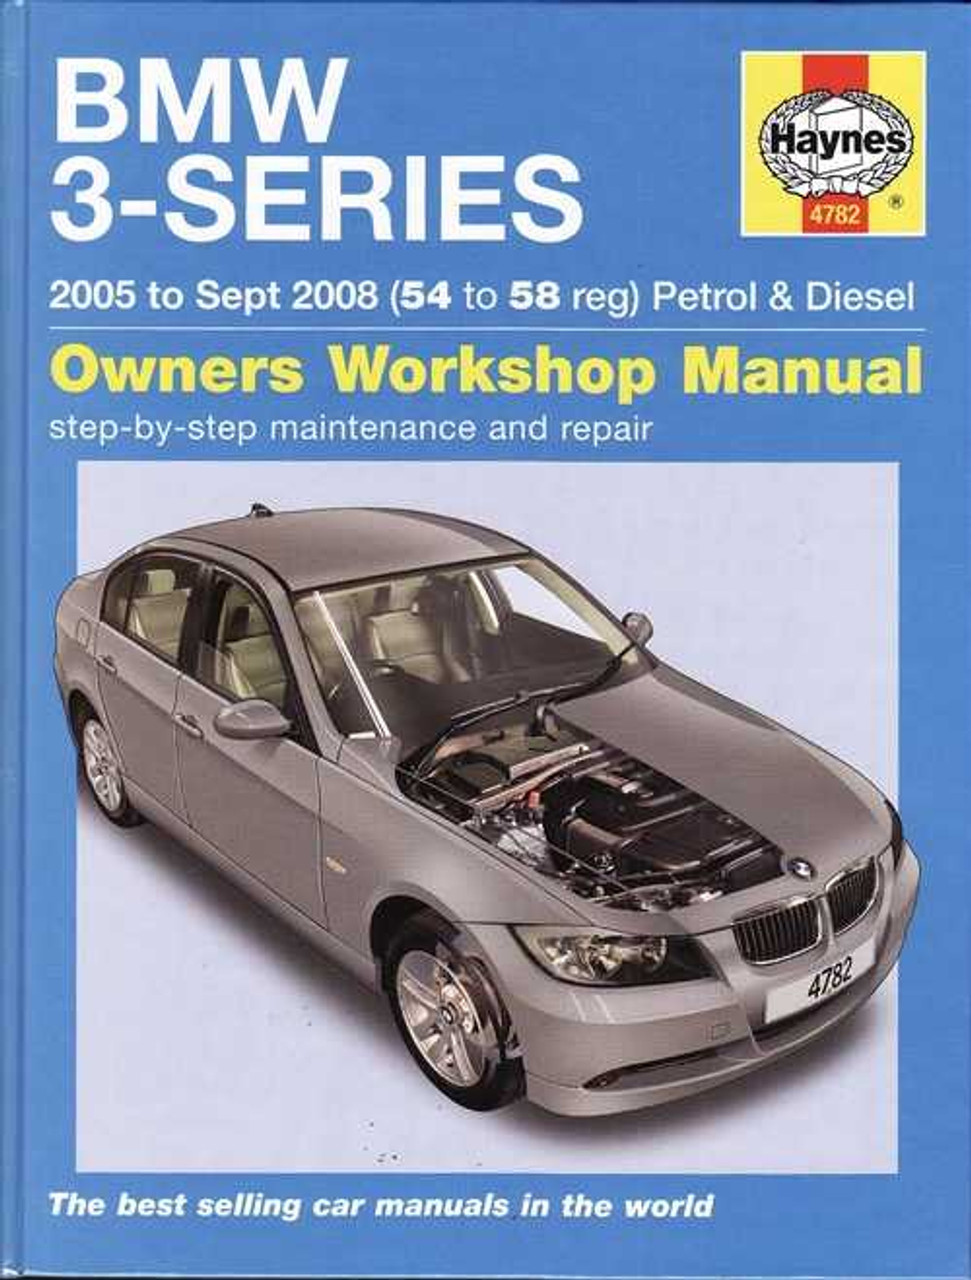 bmw e91 owners manual pdf